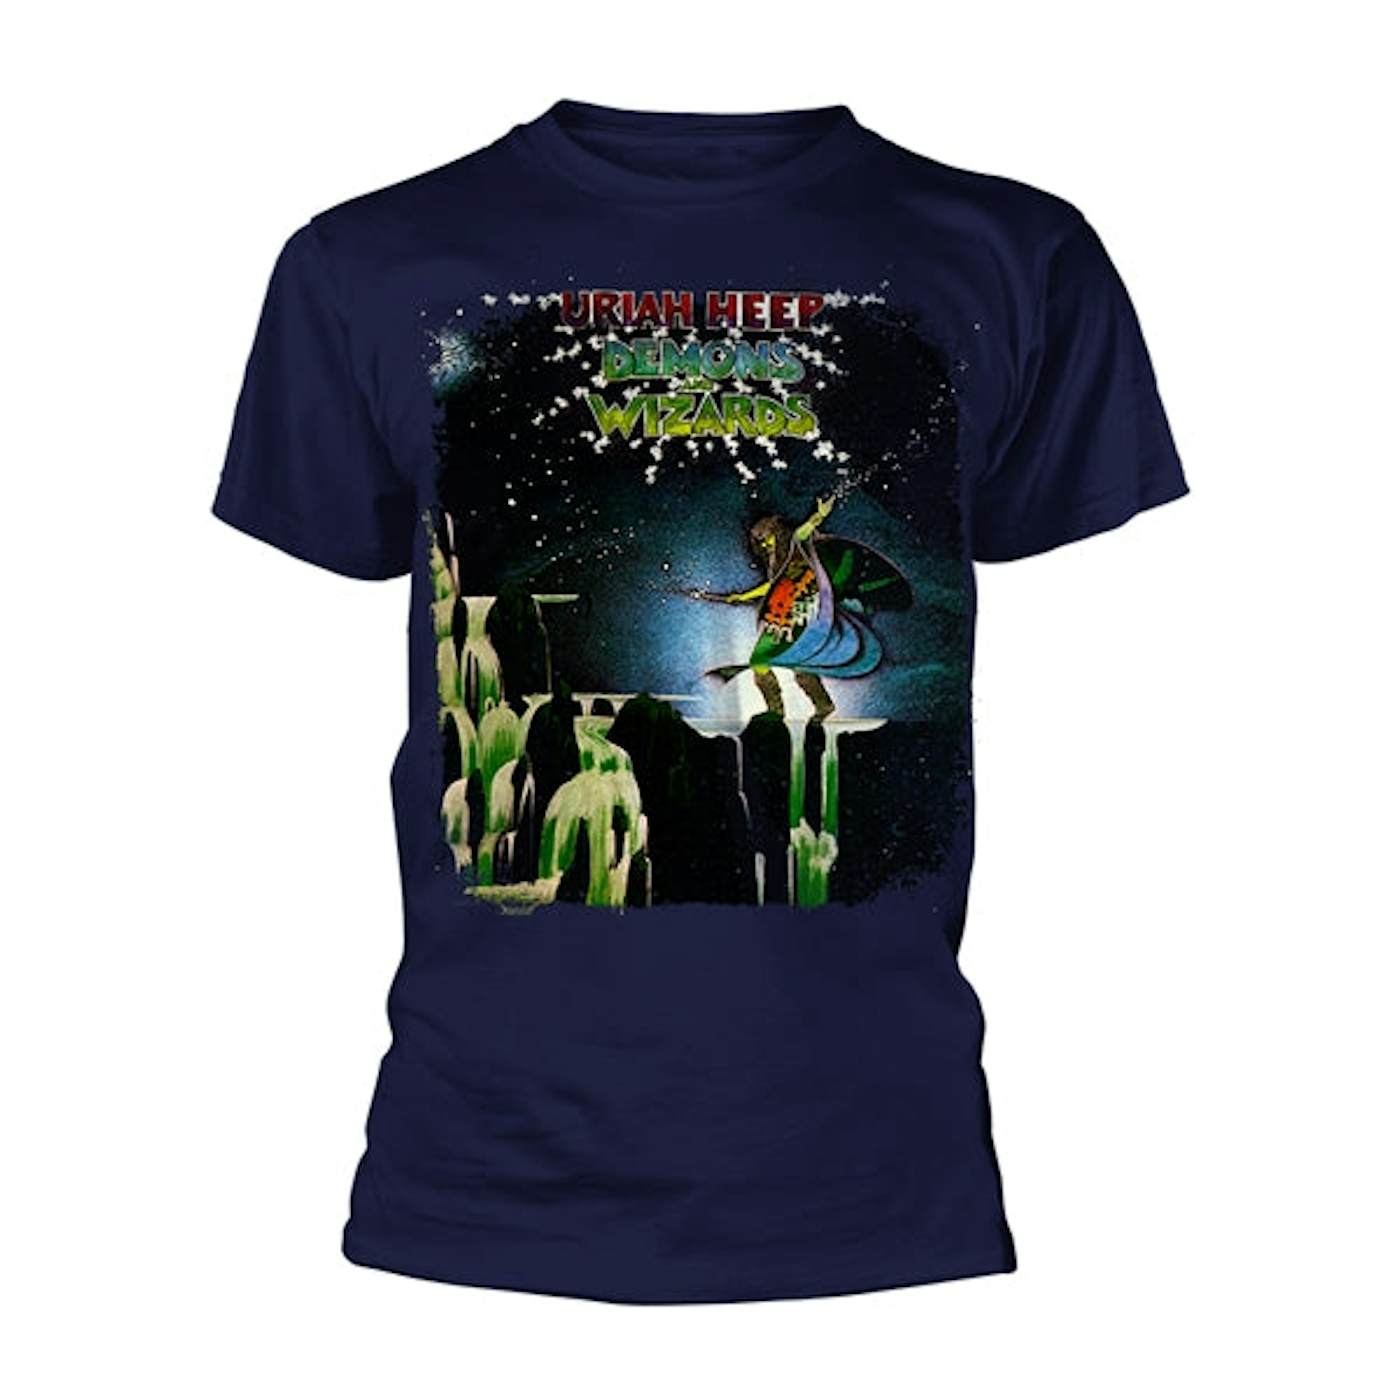 Uriah Heep T-Shirt - Demons And Wizards (Navy)